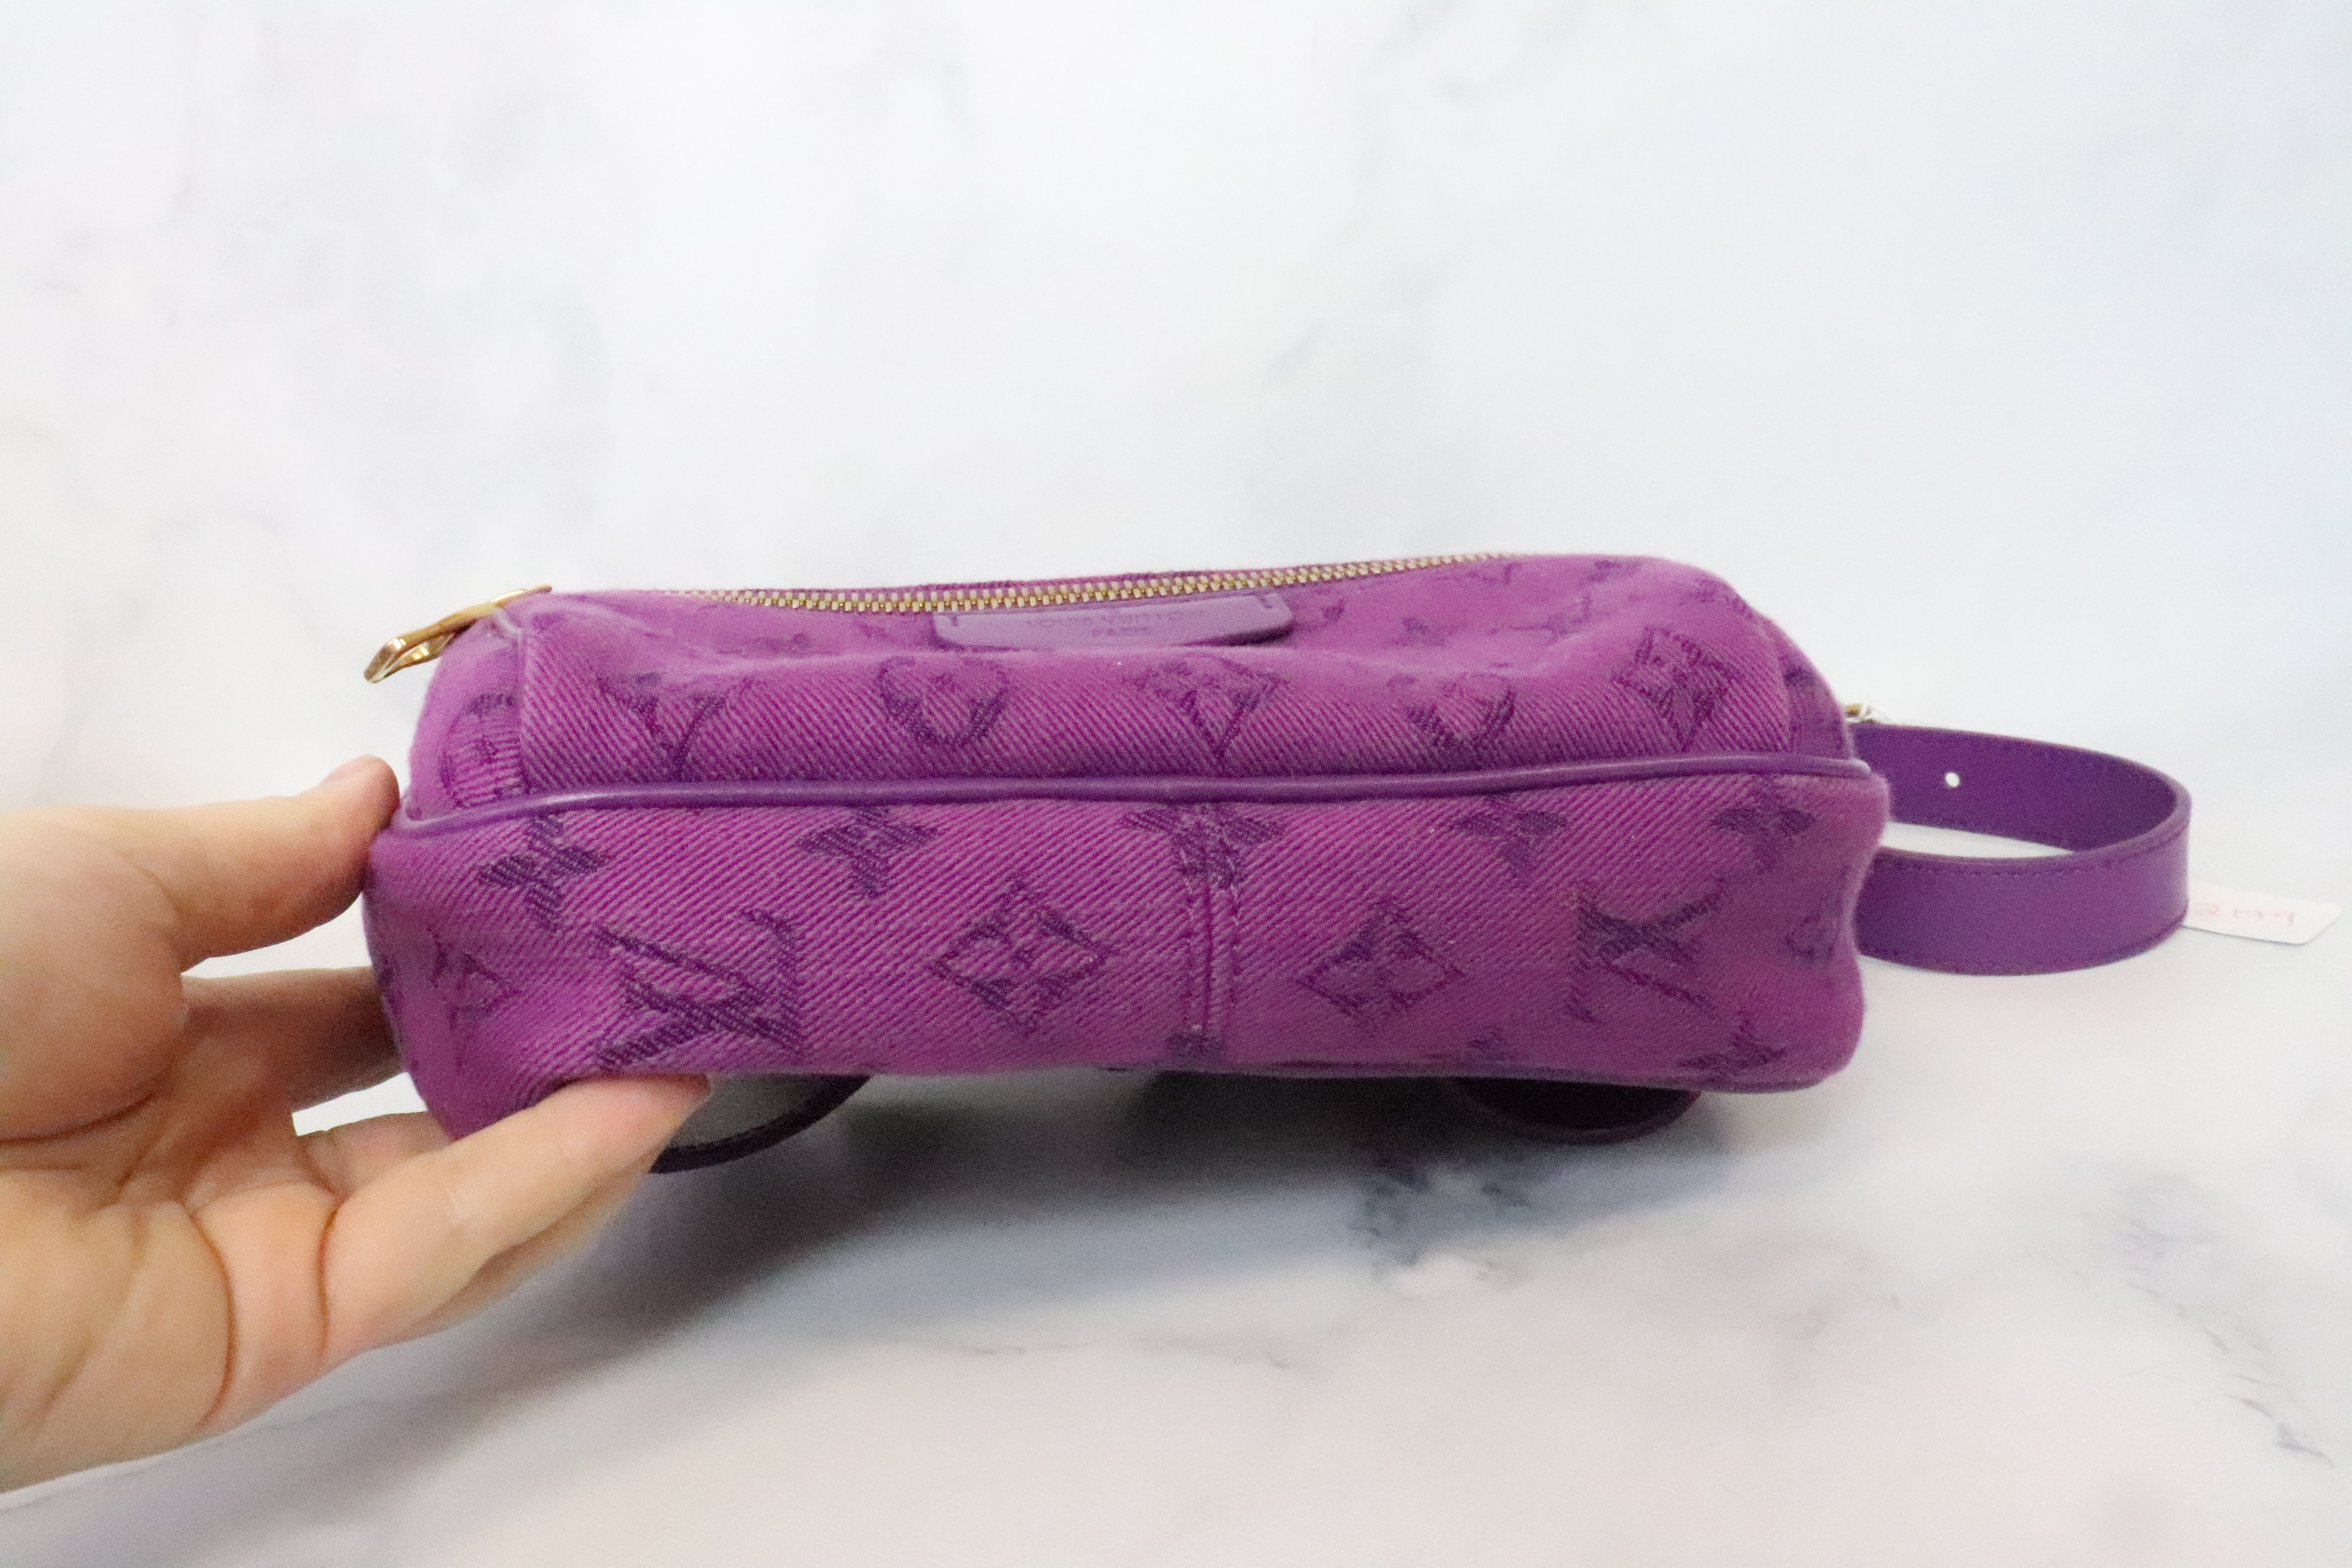 Louis Vuitton Denim BumBag Outdoor Body Bag Purple Monogram